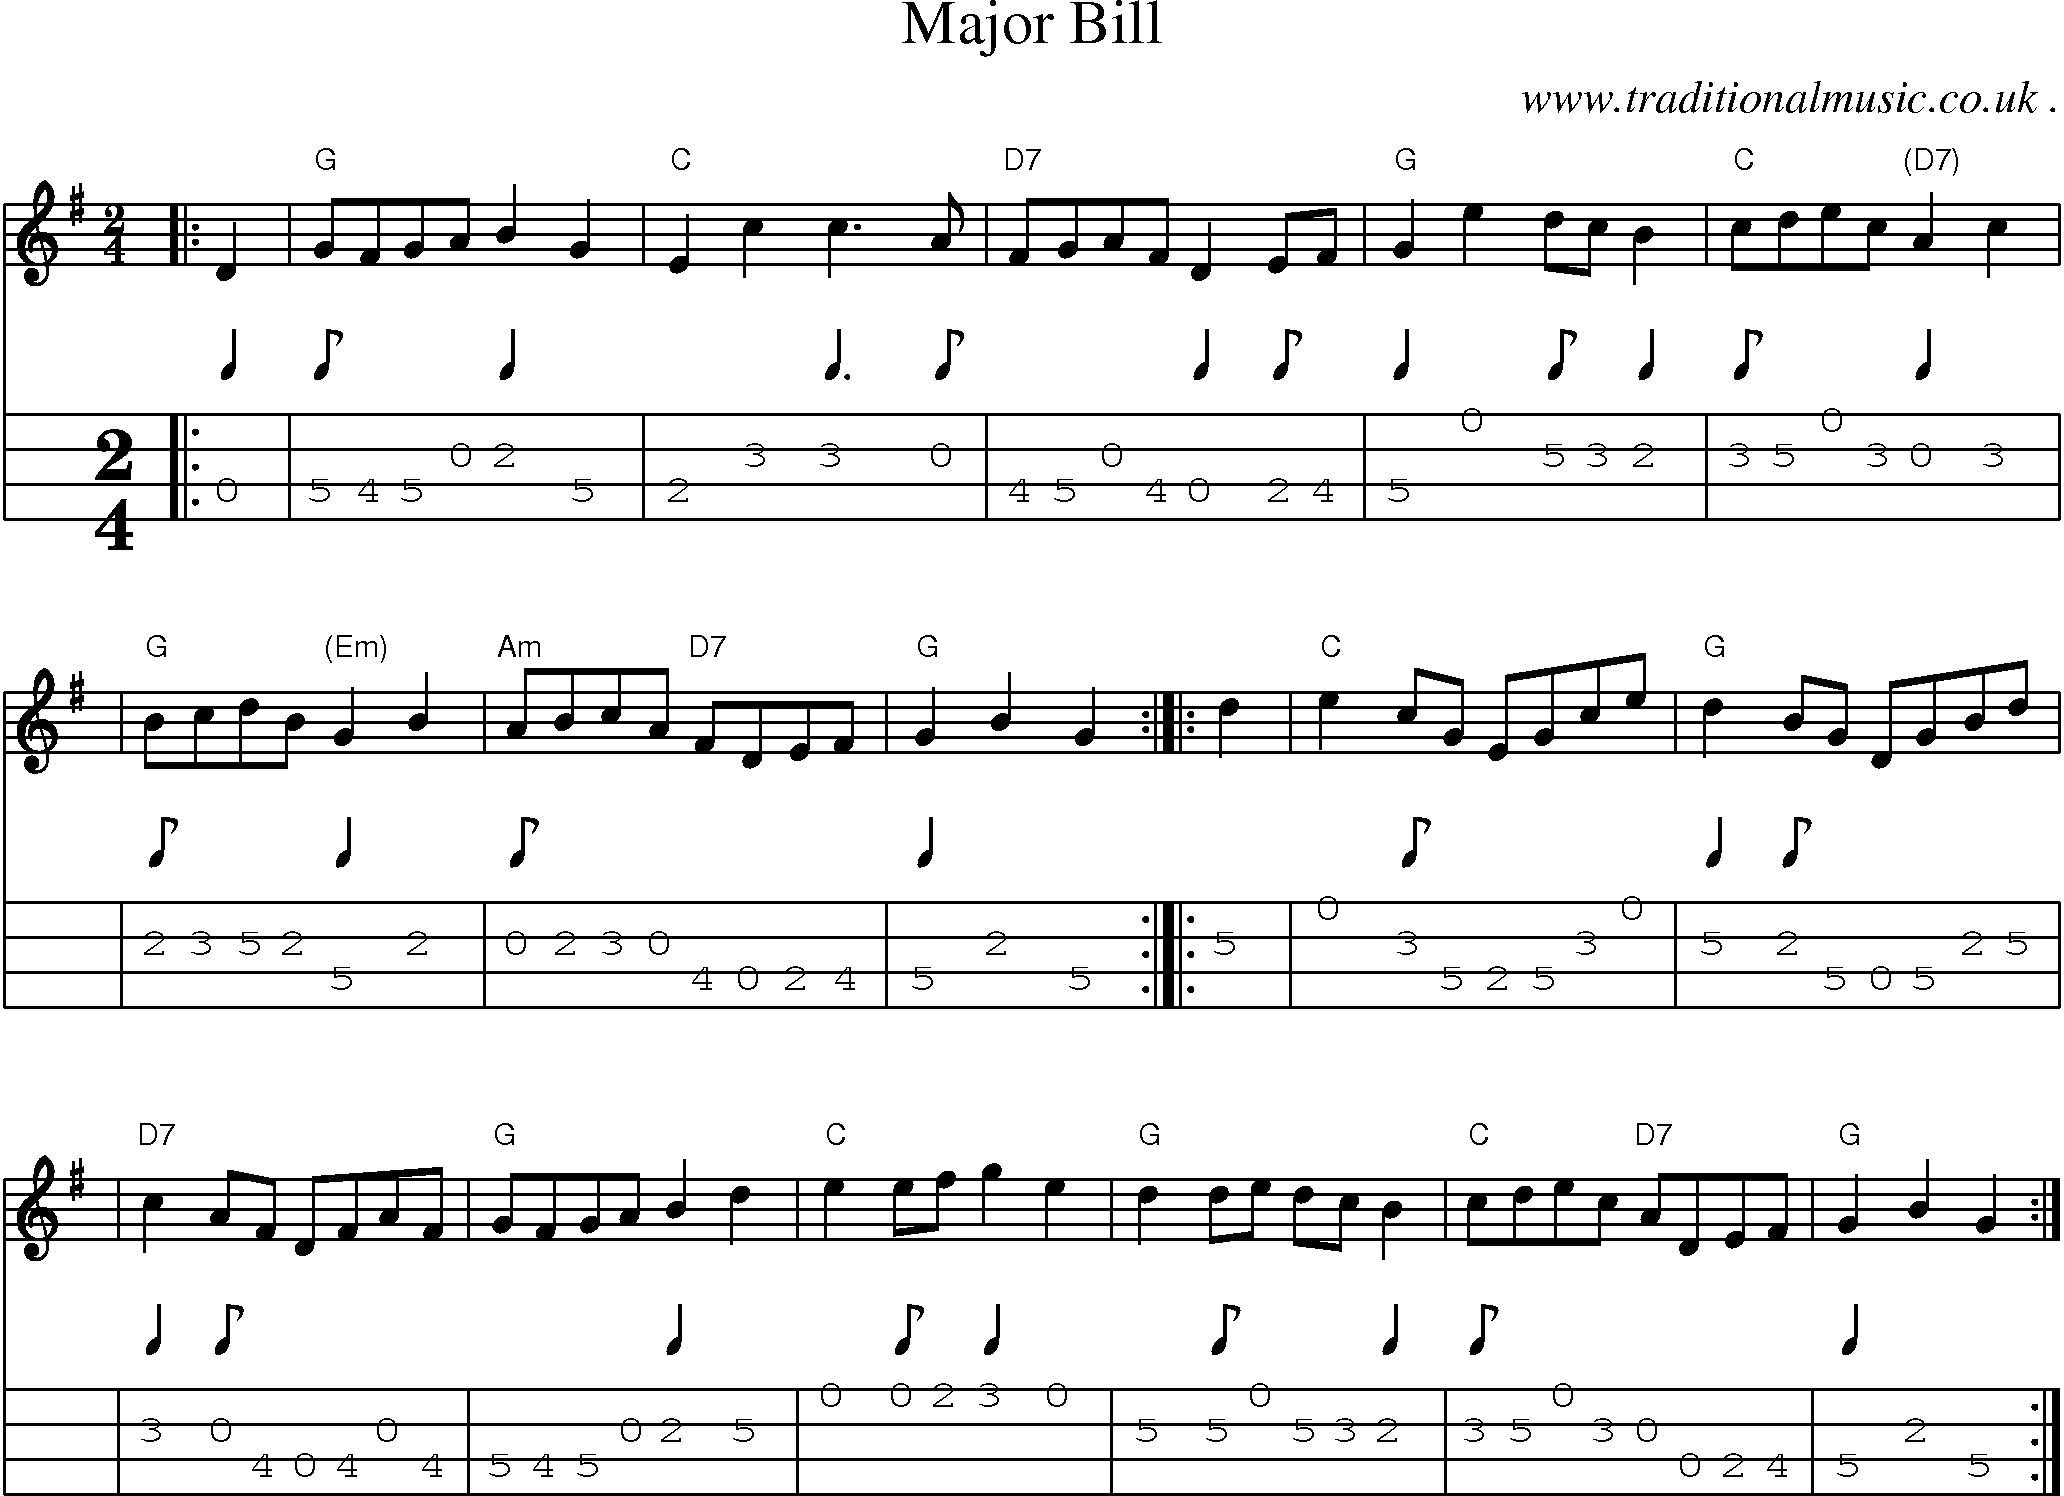 Sheet-music  score, Chords and Mandolin Tabs for Major Bill